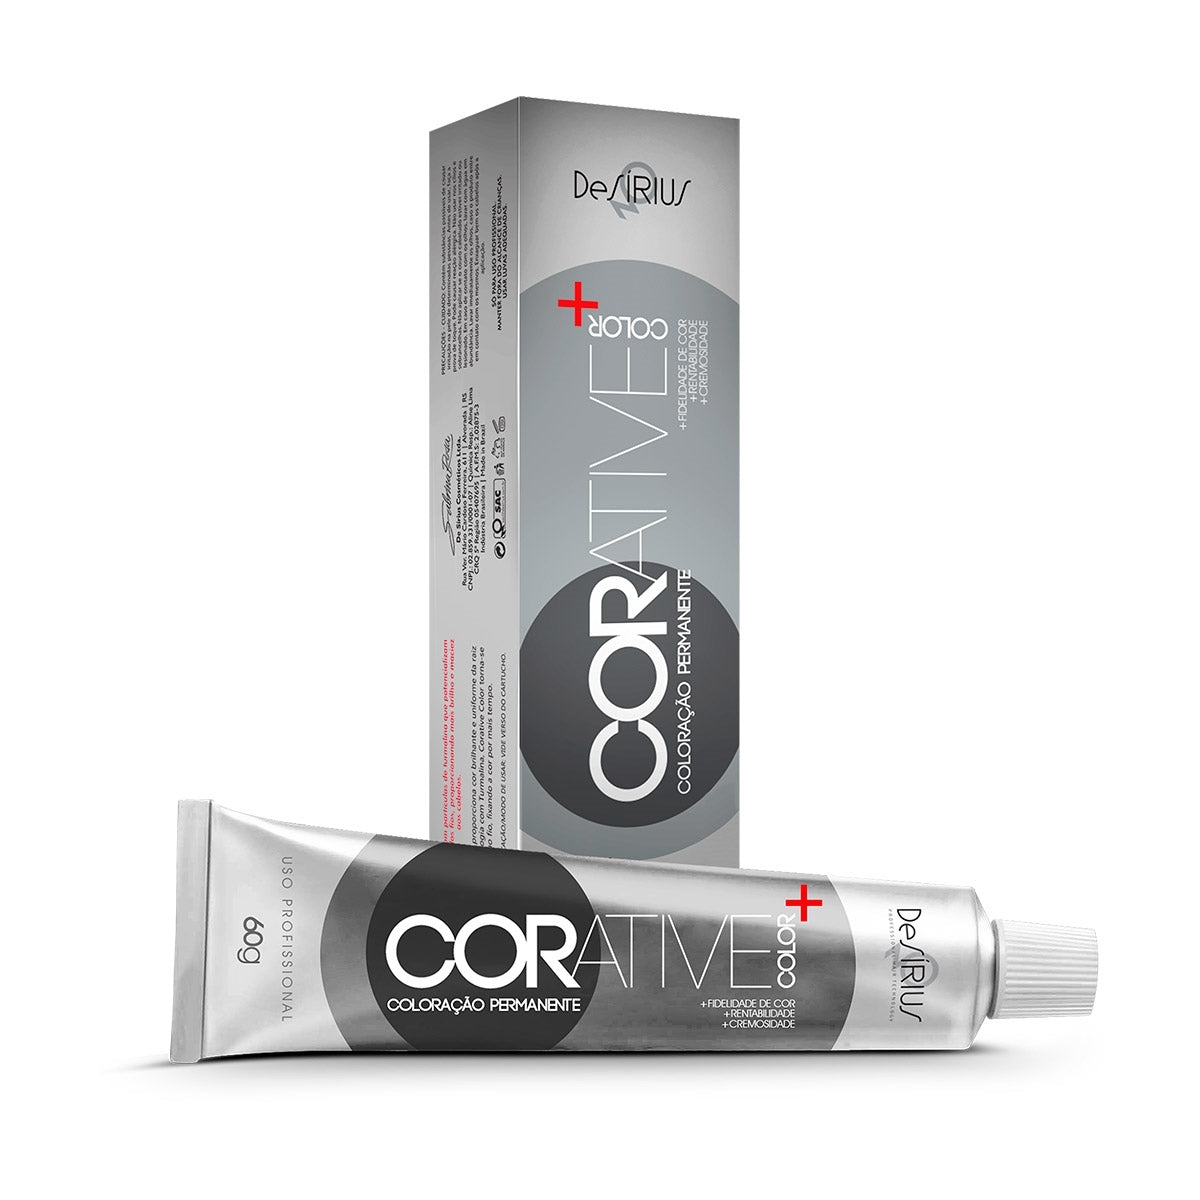 CORATIVE COLORATION - 9.0 EXTRA LIGHT BLOND - 60G FS Cosmetics